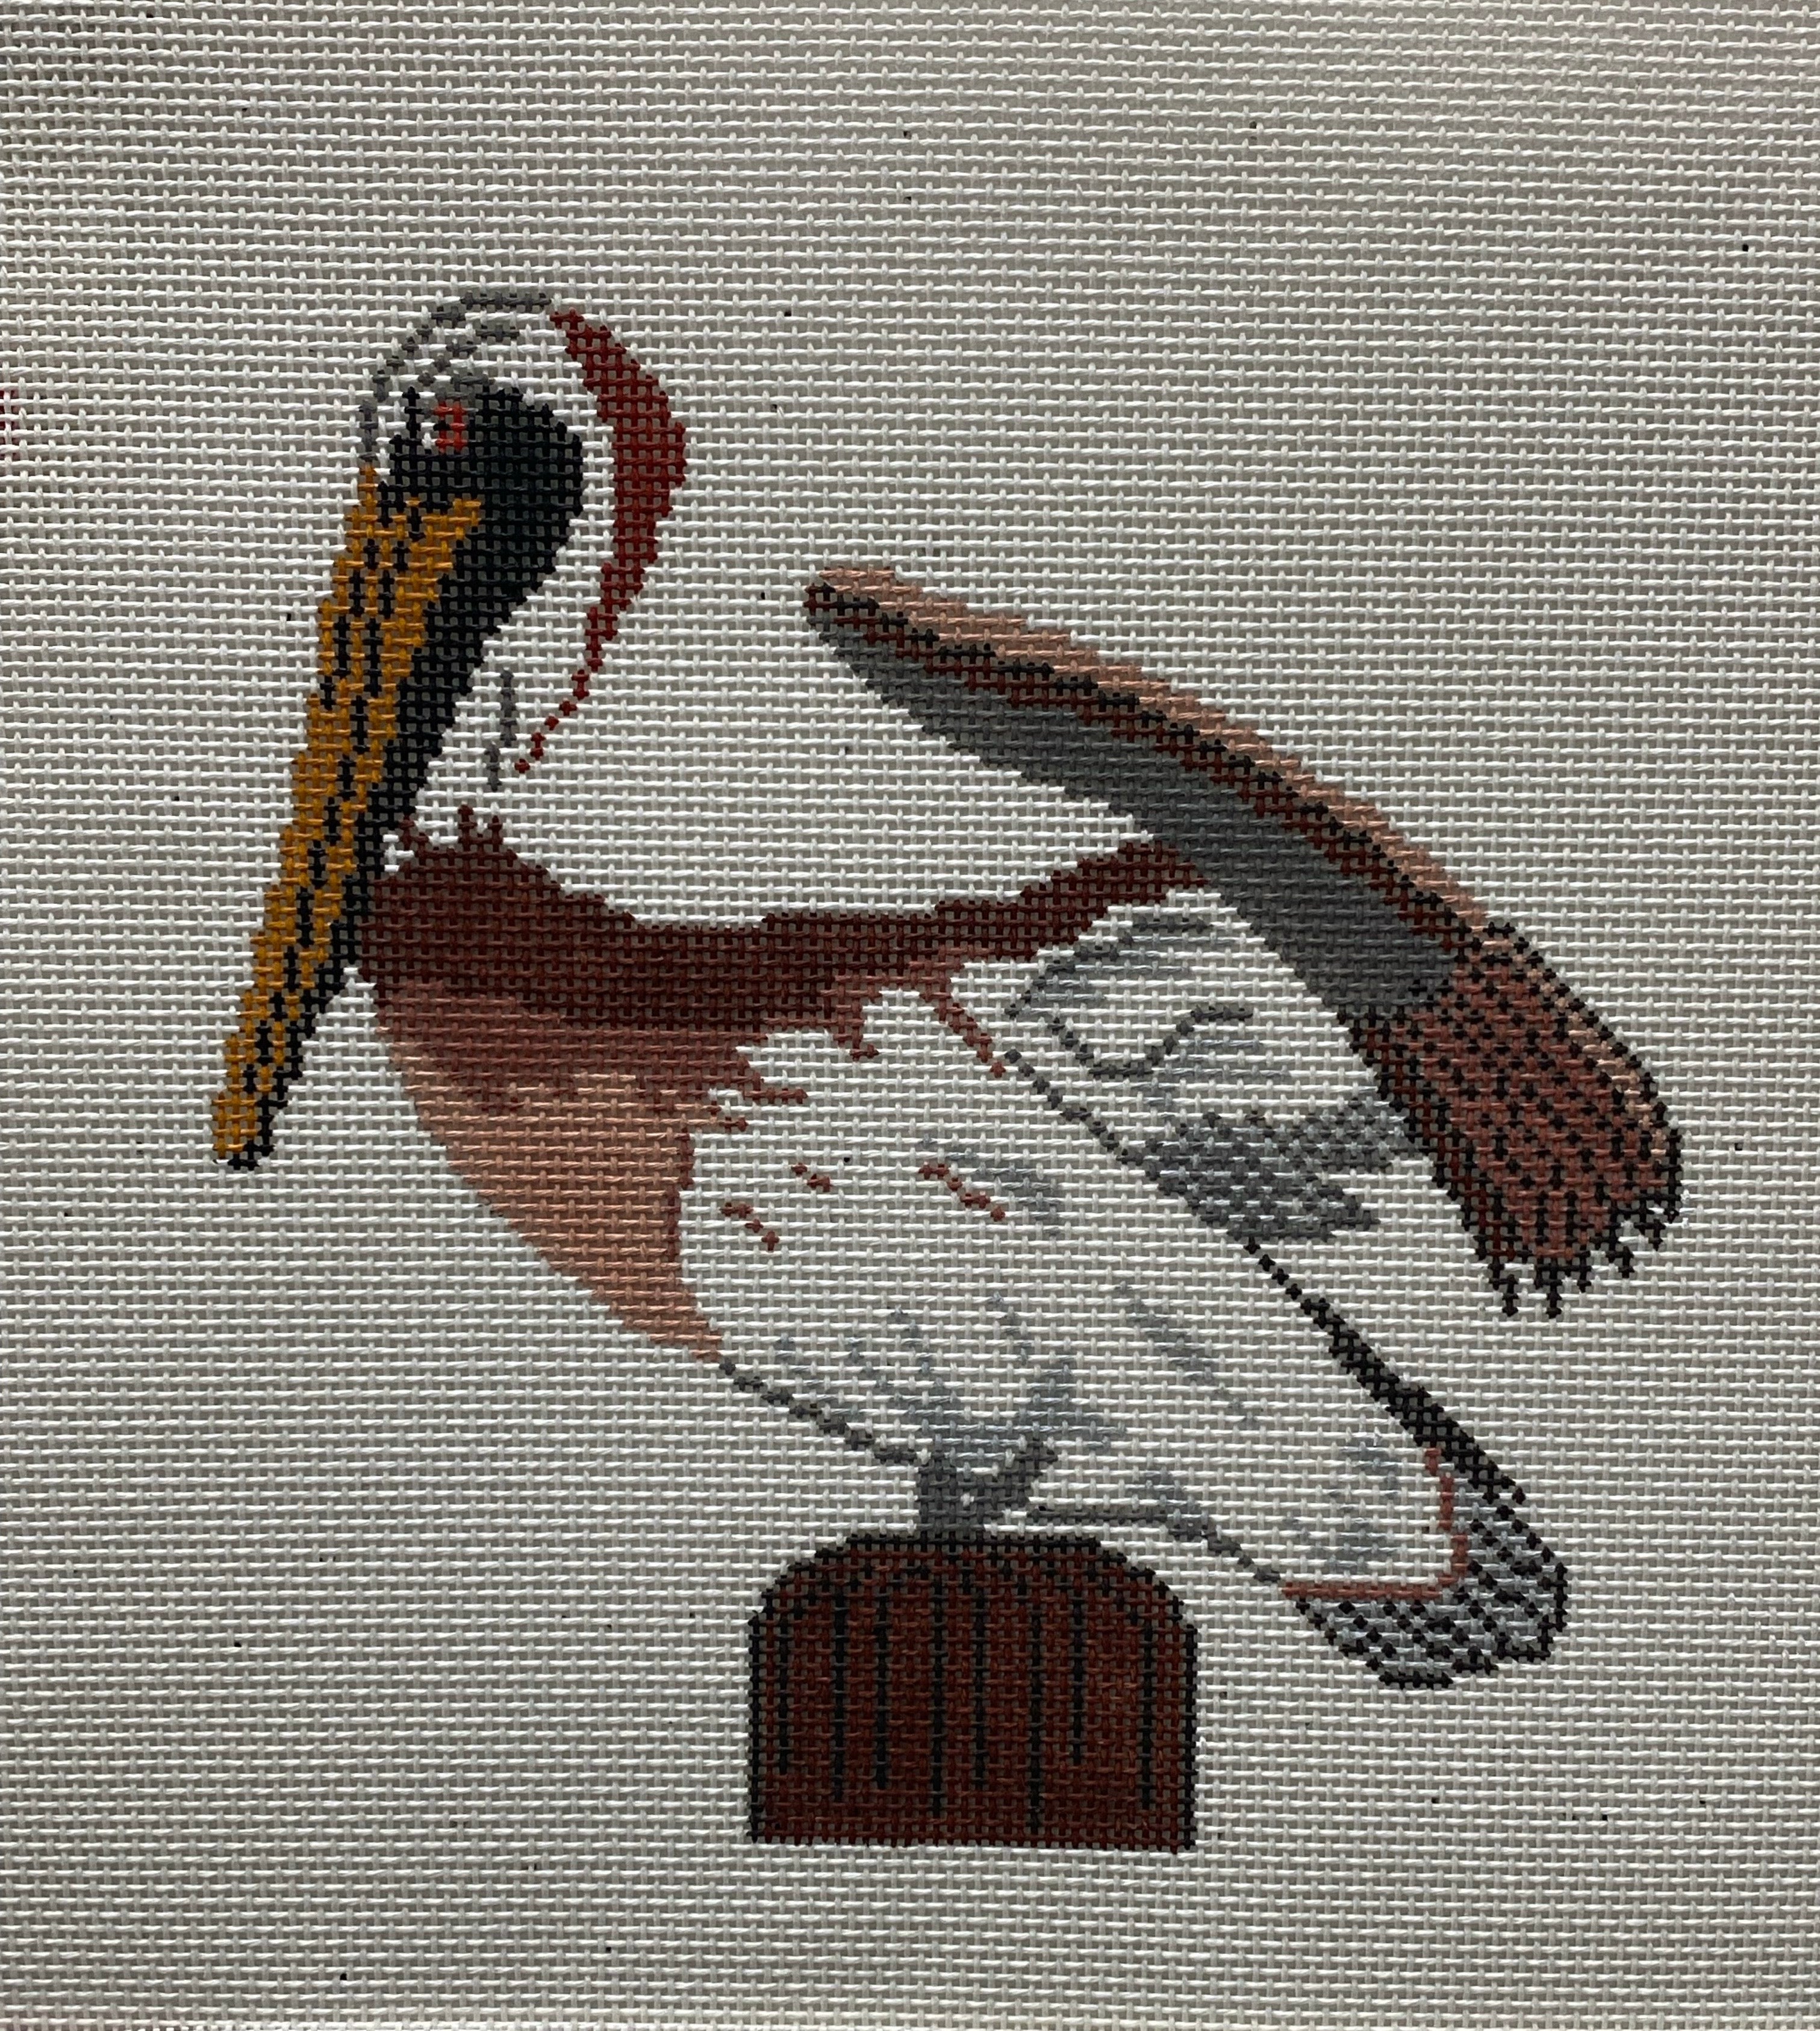 JAP24 - Pelican